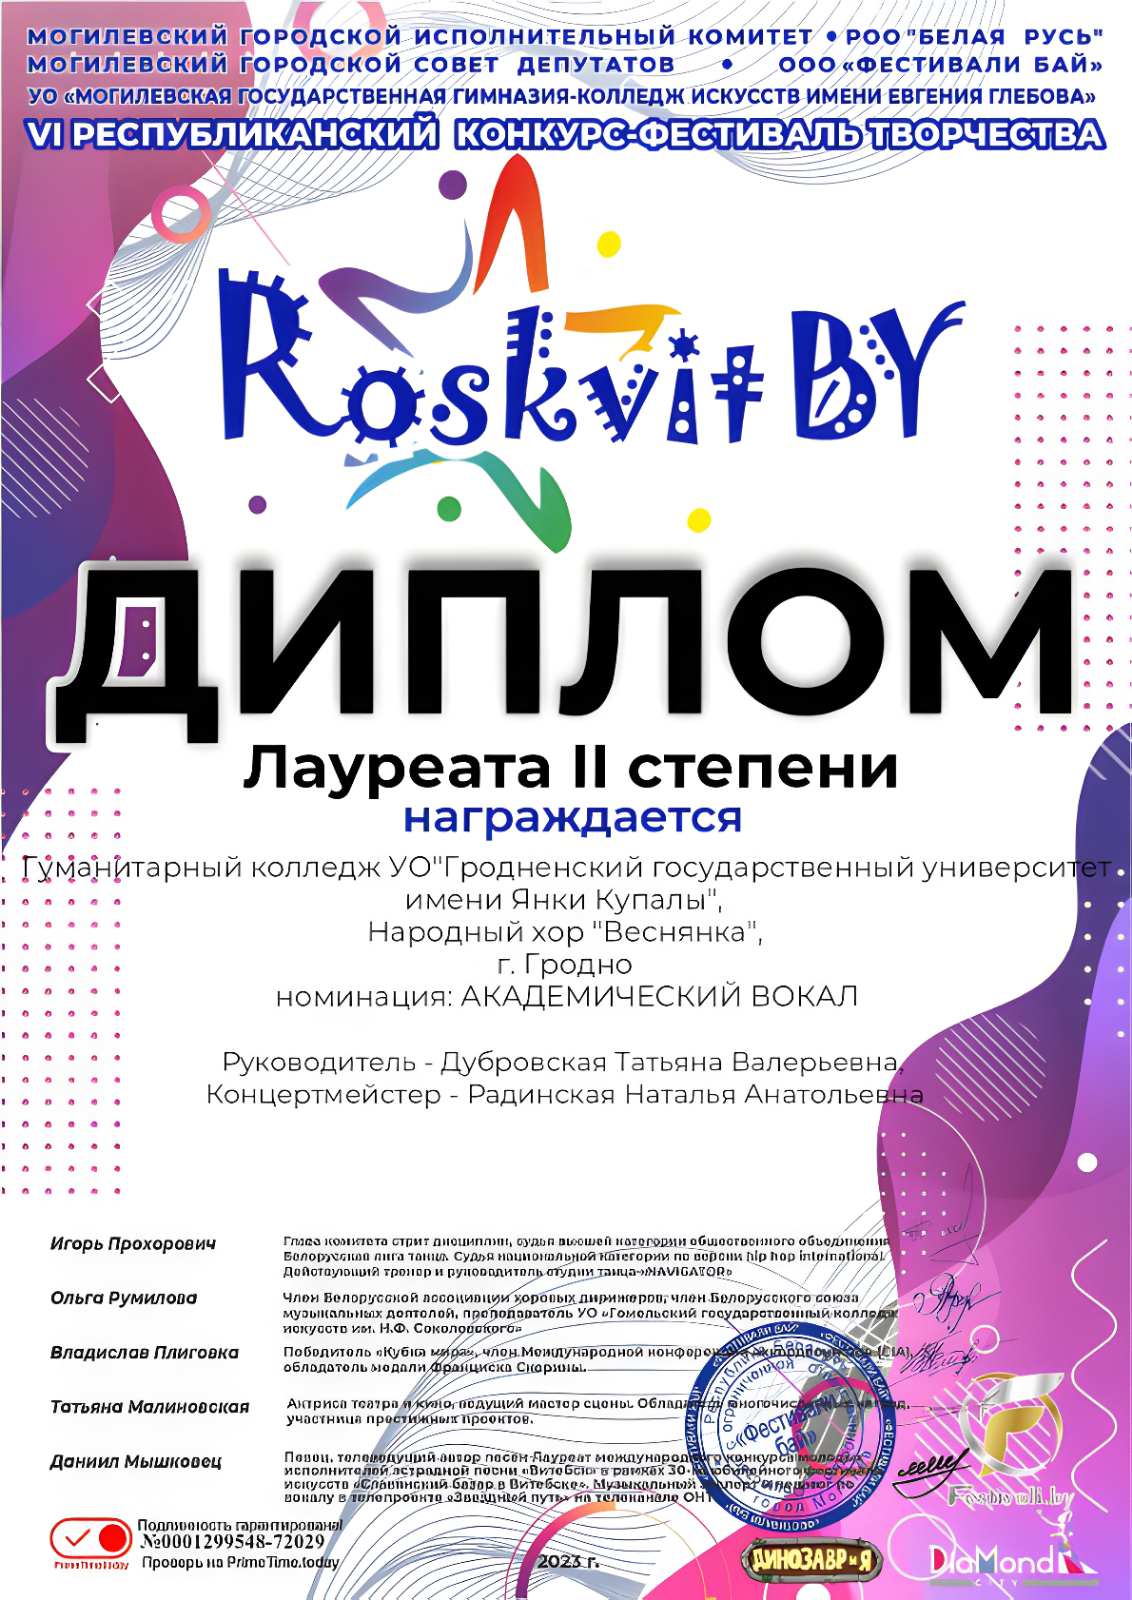 Купаловцы стали лауреатами VI Республиканского конкурса-фестиваля творчества «Roskvit.by»